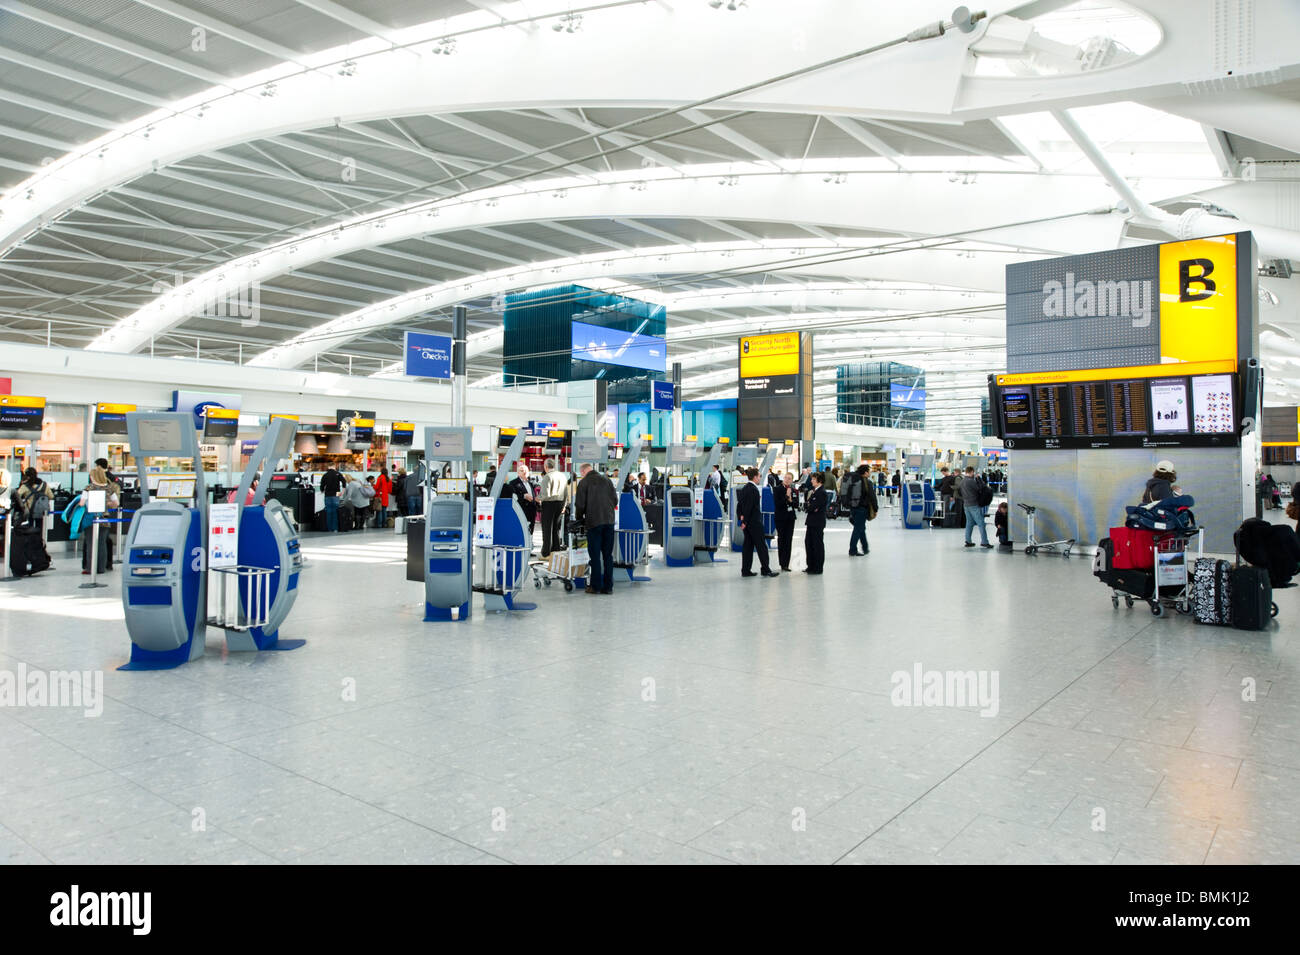 Heathrow Airport Terminal 5, London, England, UK Banque D'Images